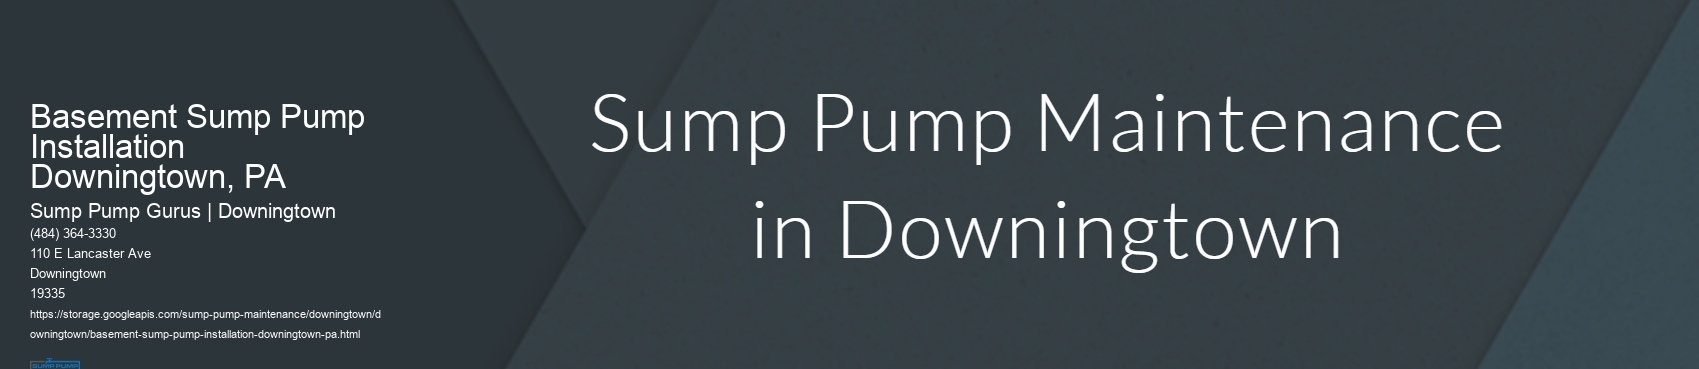 Basement Sump Pump Installation Downingtown, PA